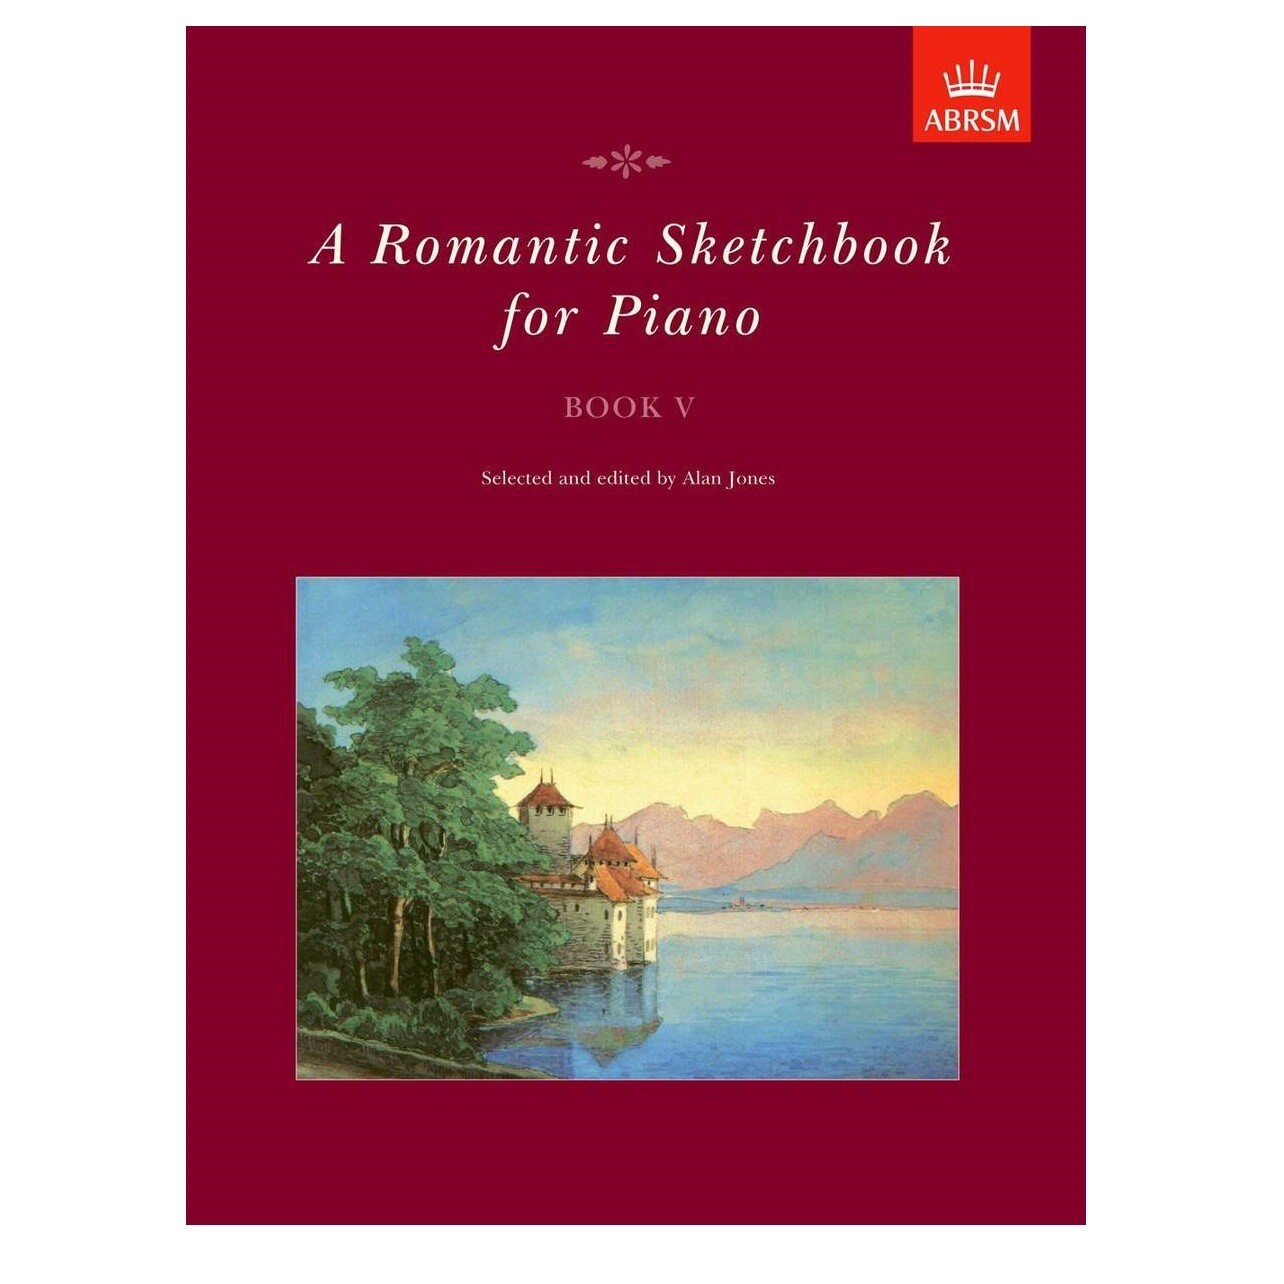 A Romantic Sketchbook for Piano, Book V